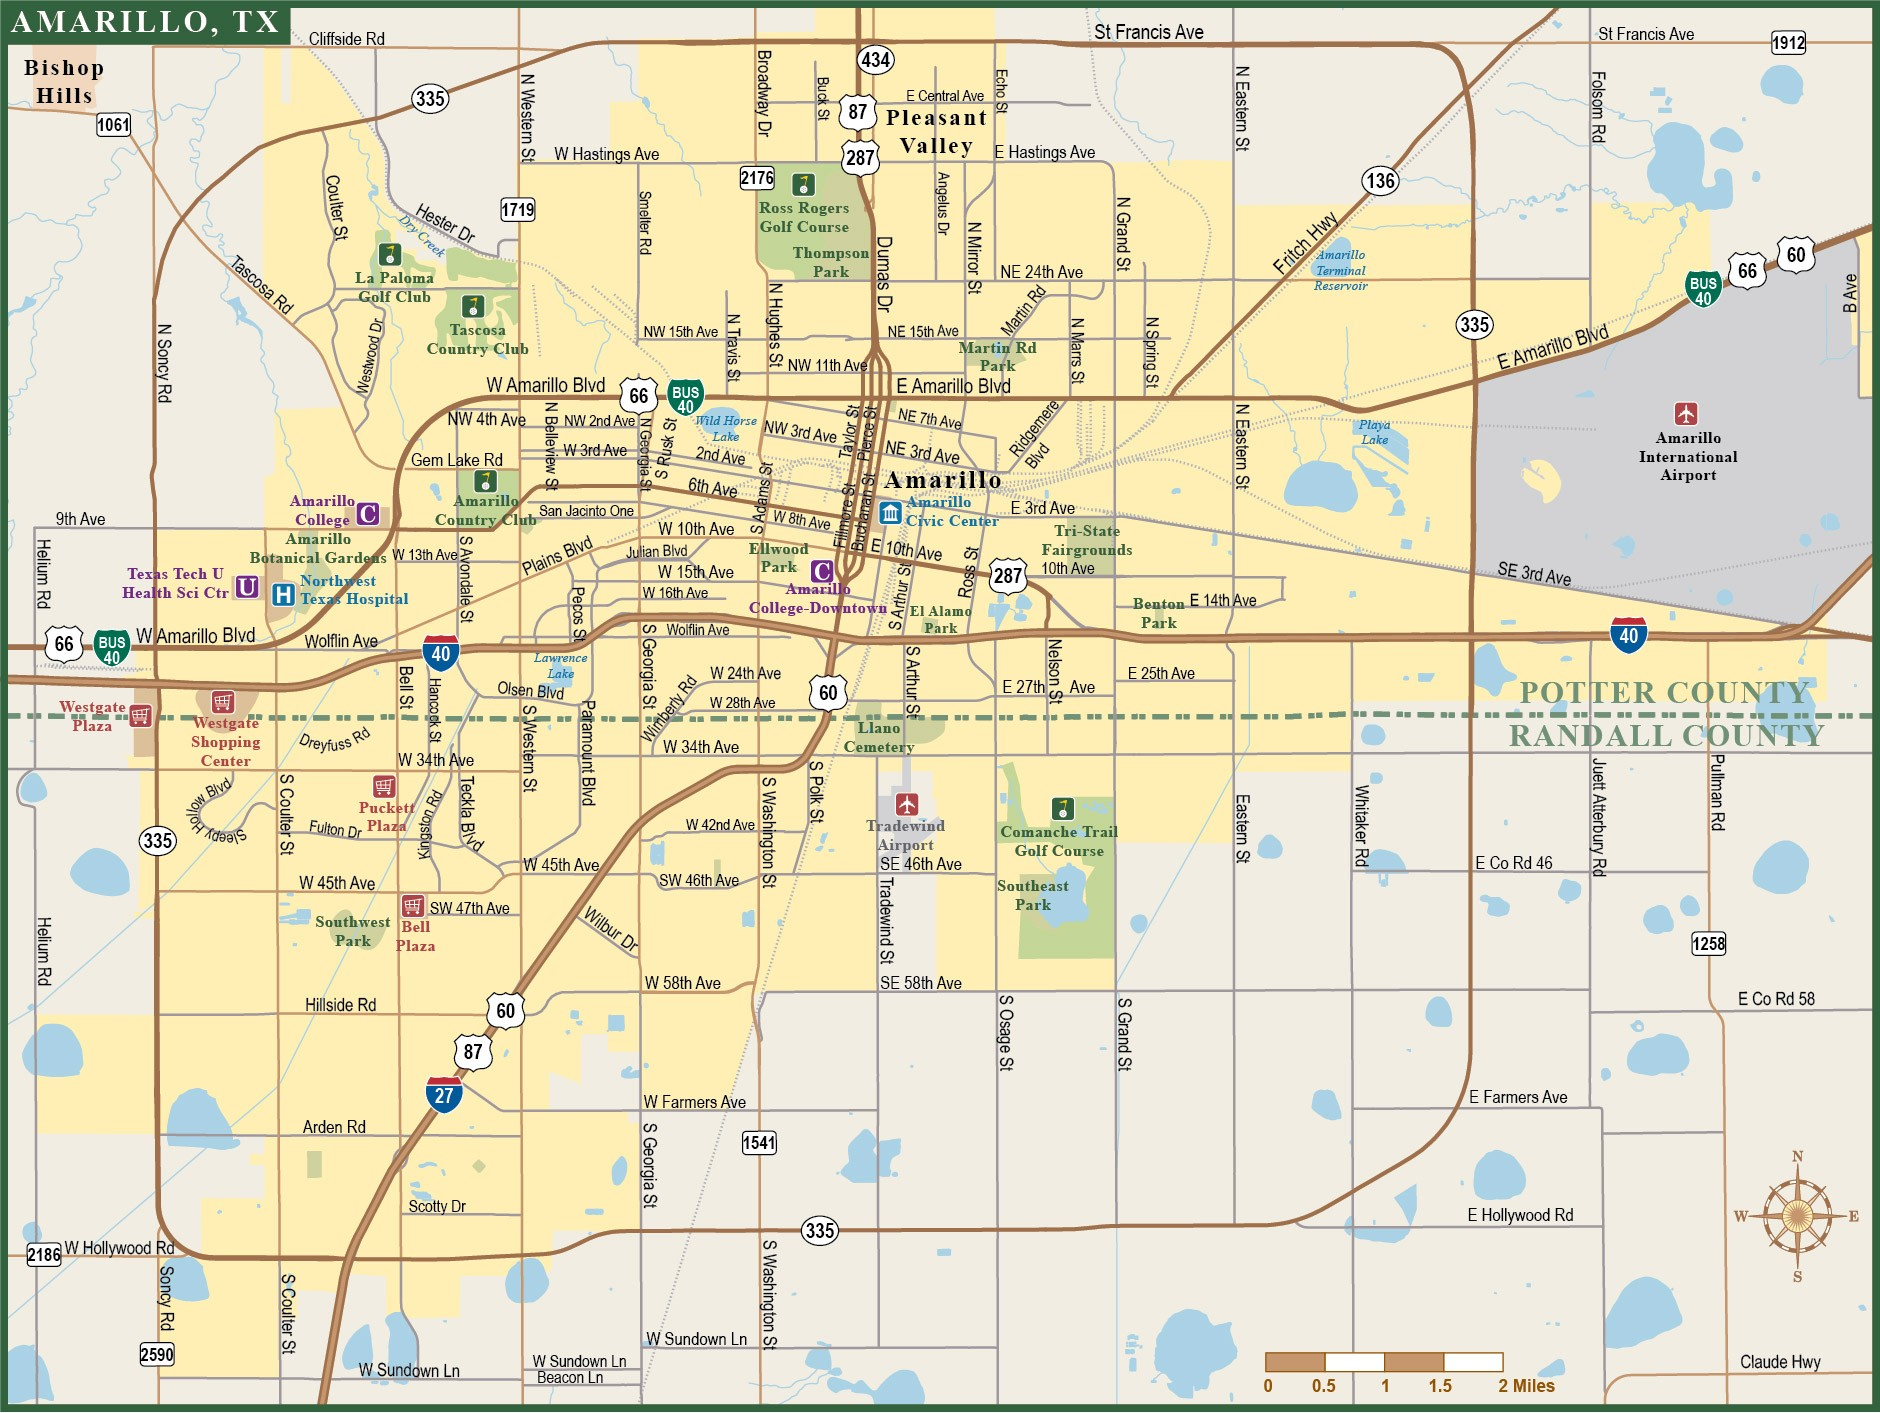 Amarillo Metro Map1 15 Amarillo Texas Map | Ageorgio - Printable Map Of Amarillo Tx